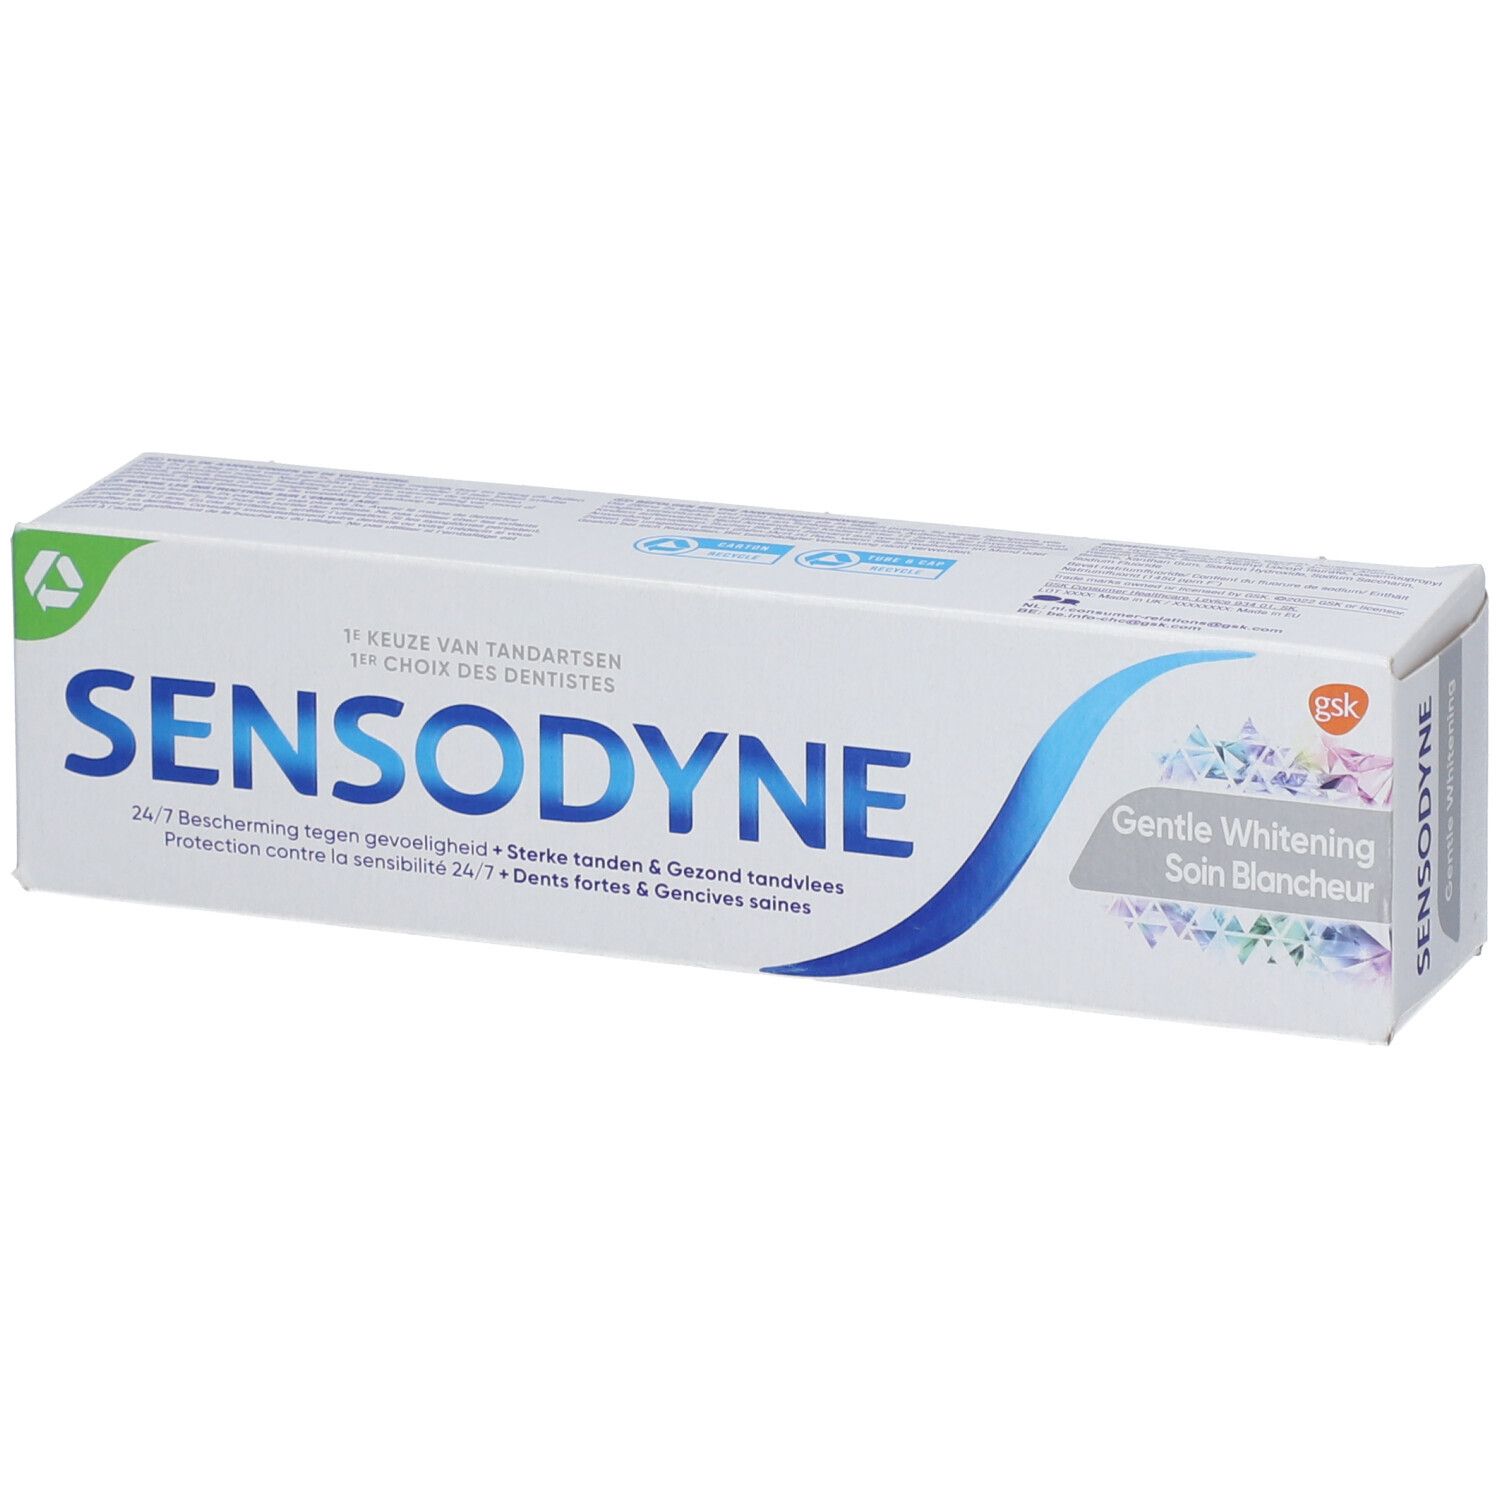 Sensodyne® Dentifrice Gentle Whitening